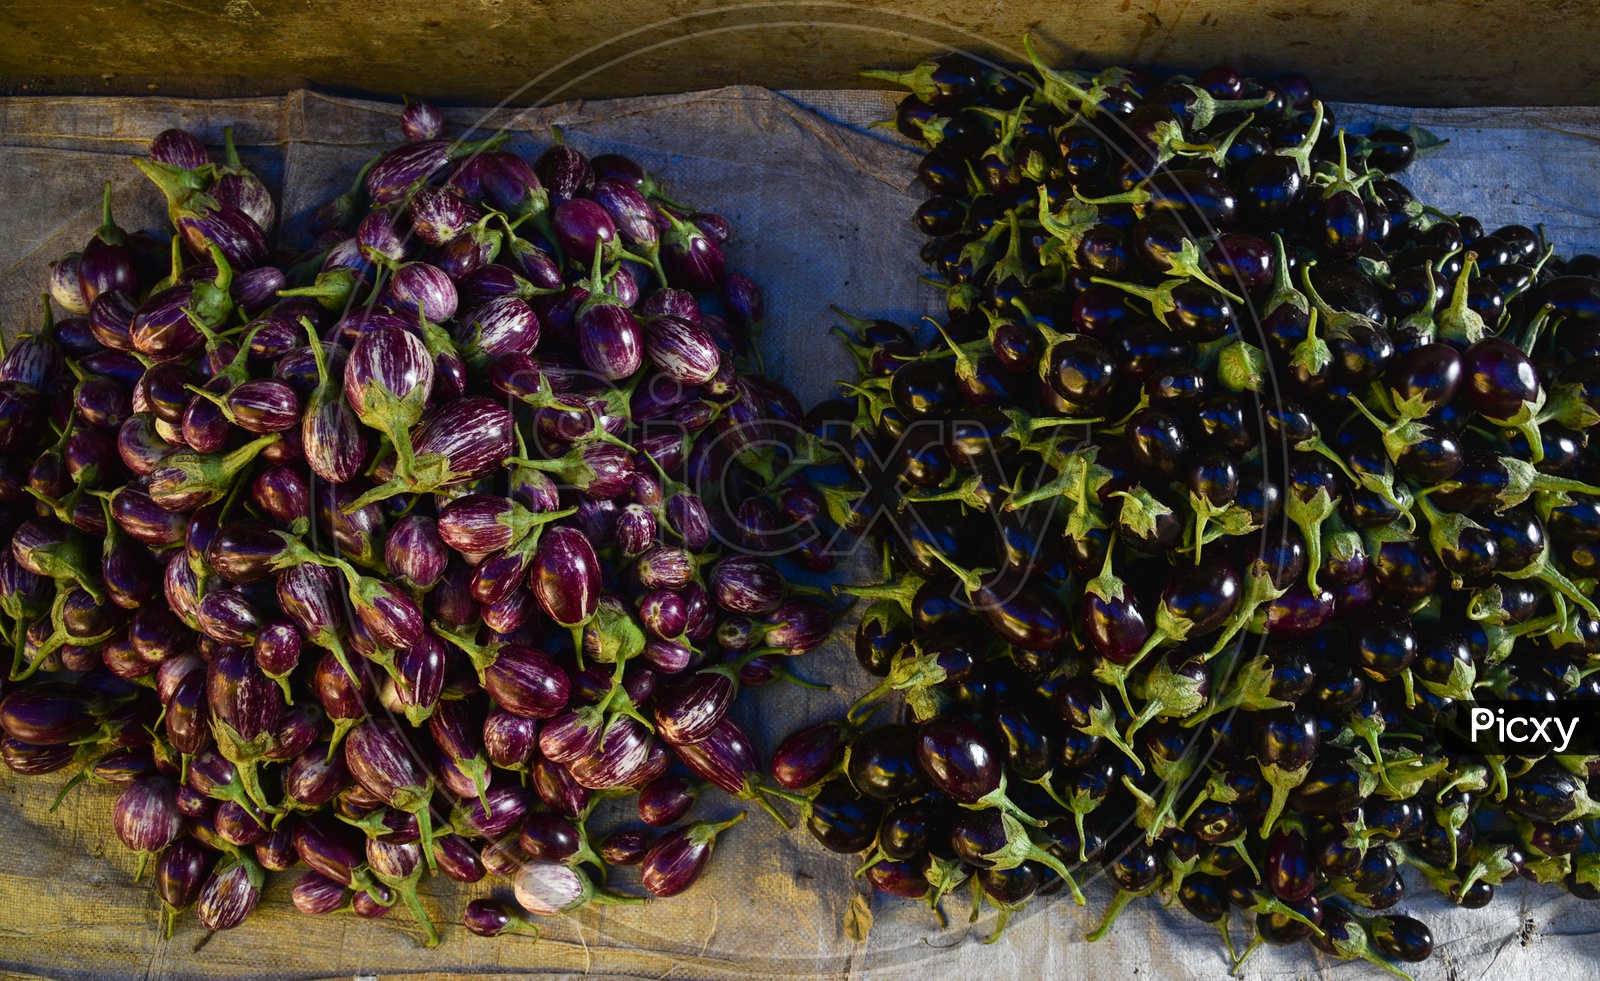 Vegetables - Purple Brinjal at Local Market/Rythu Bazar